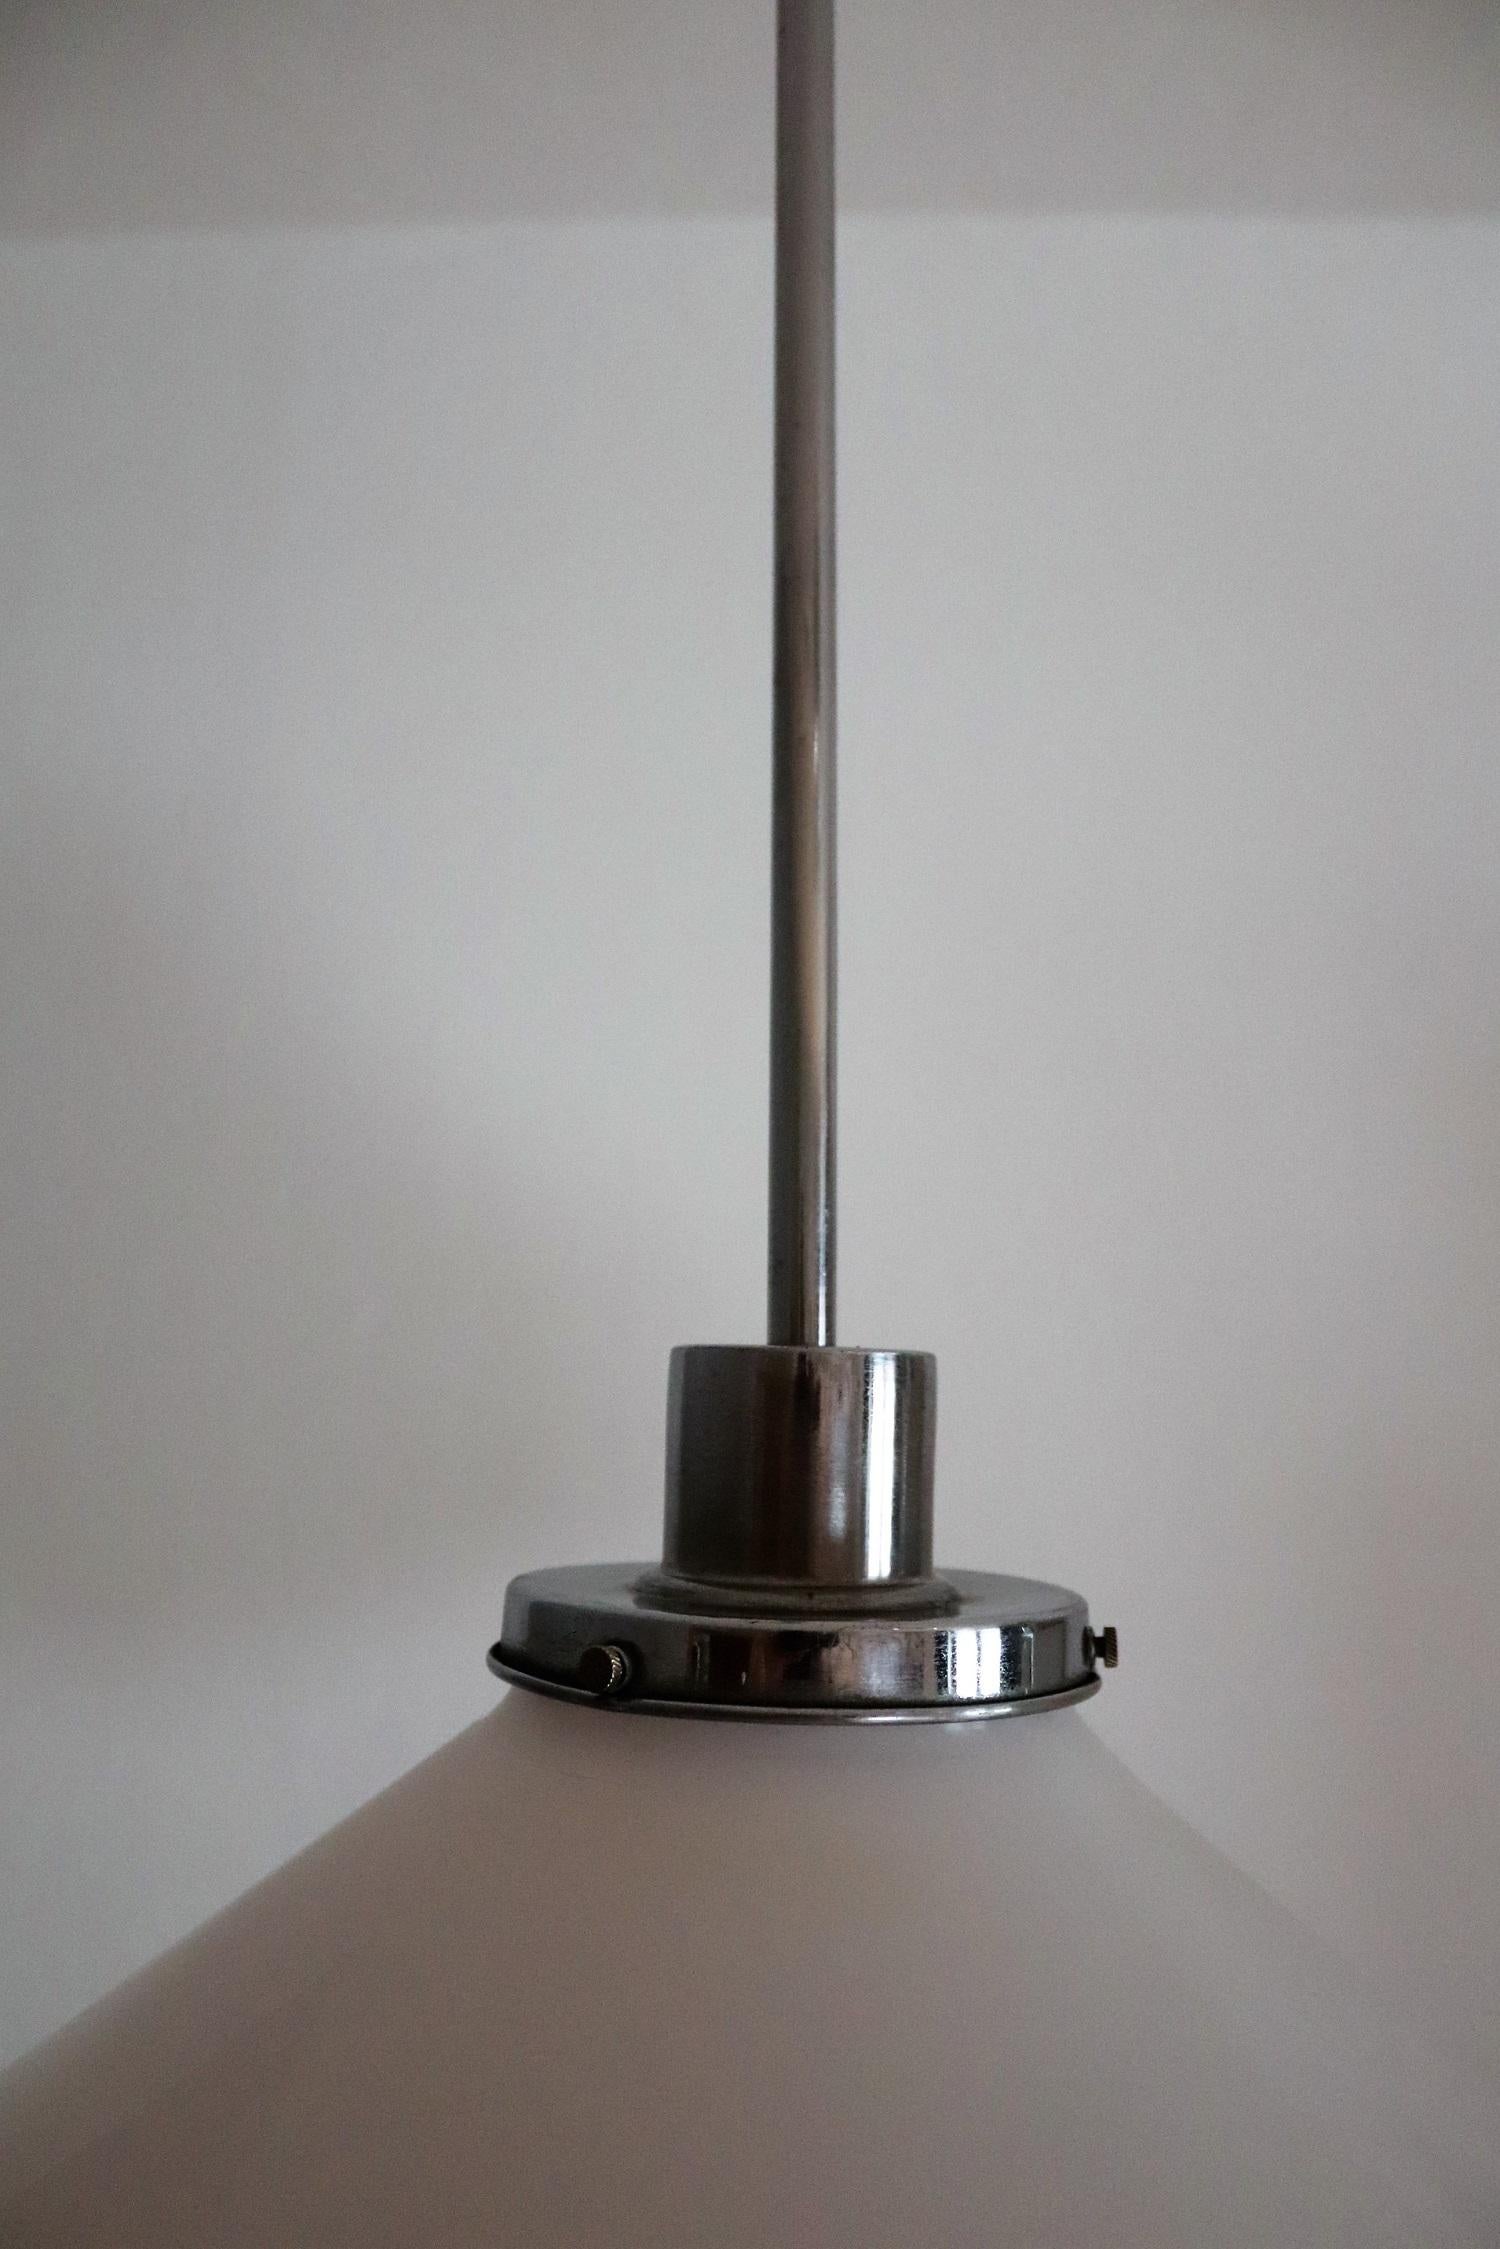 Italian Midcentury Pendant Lamp in Acrylic Aluminium and Brass by Stilnovo 1950s For Sale 5